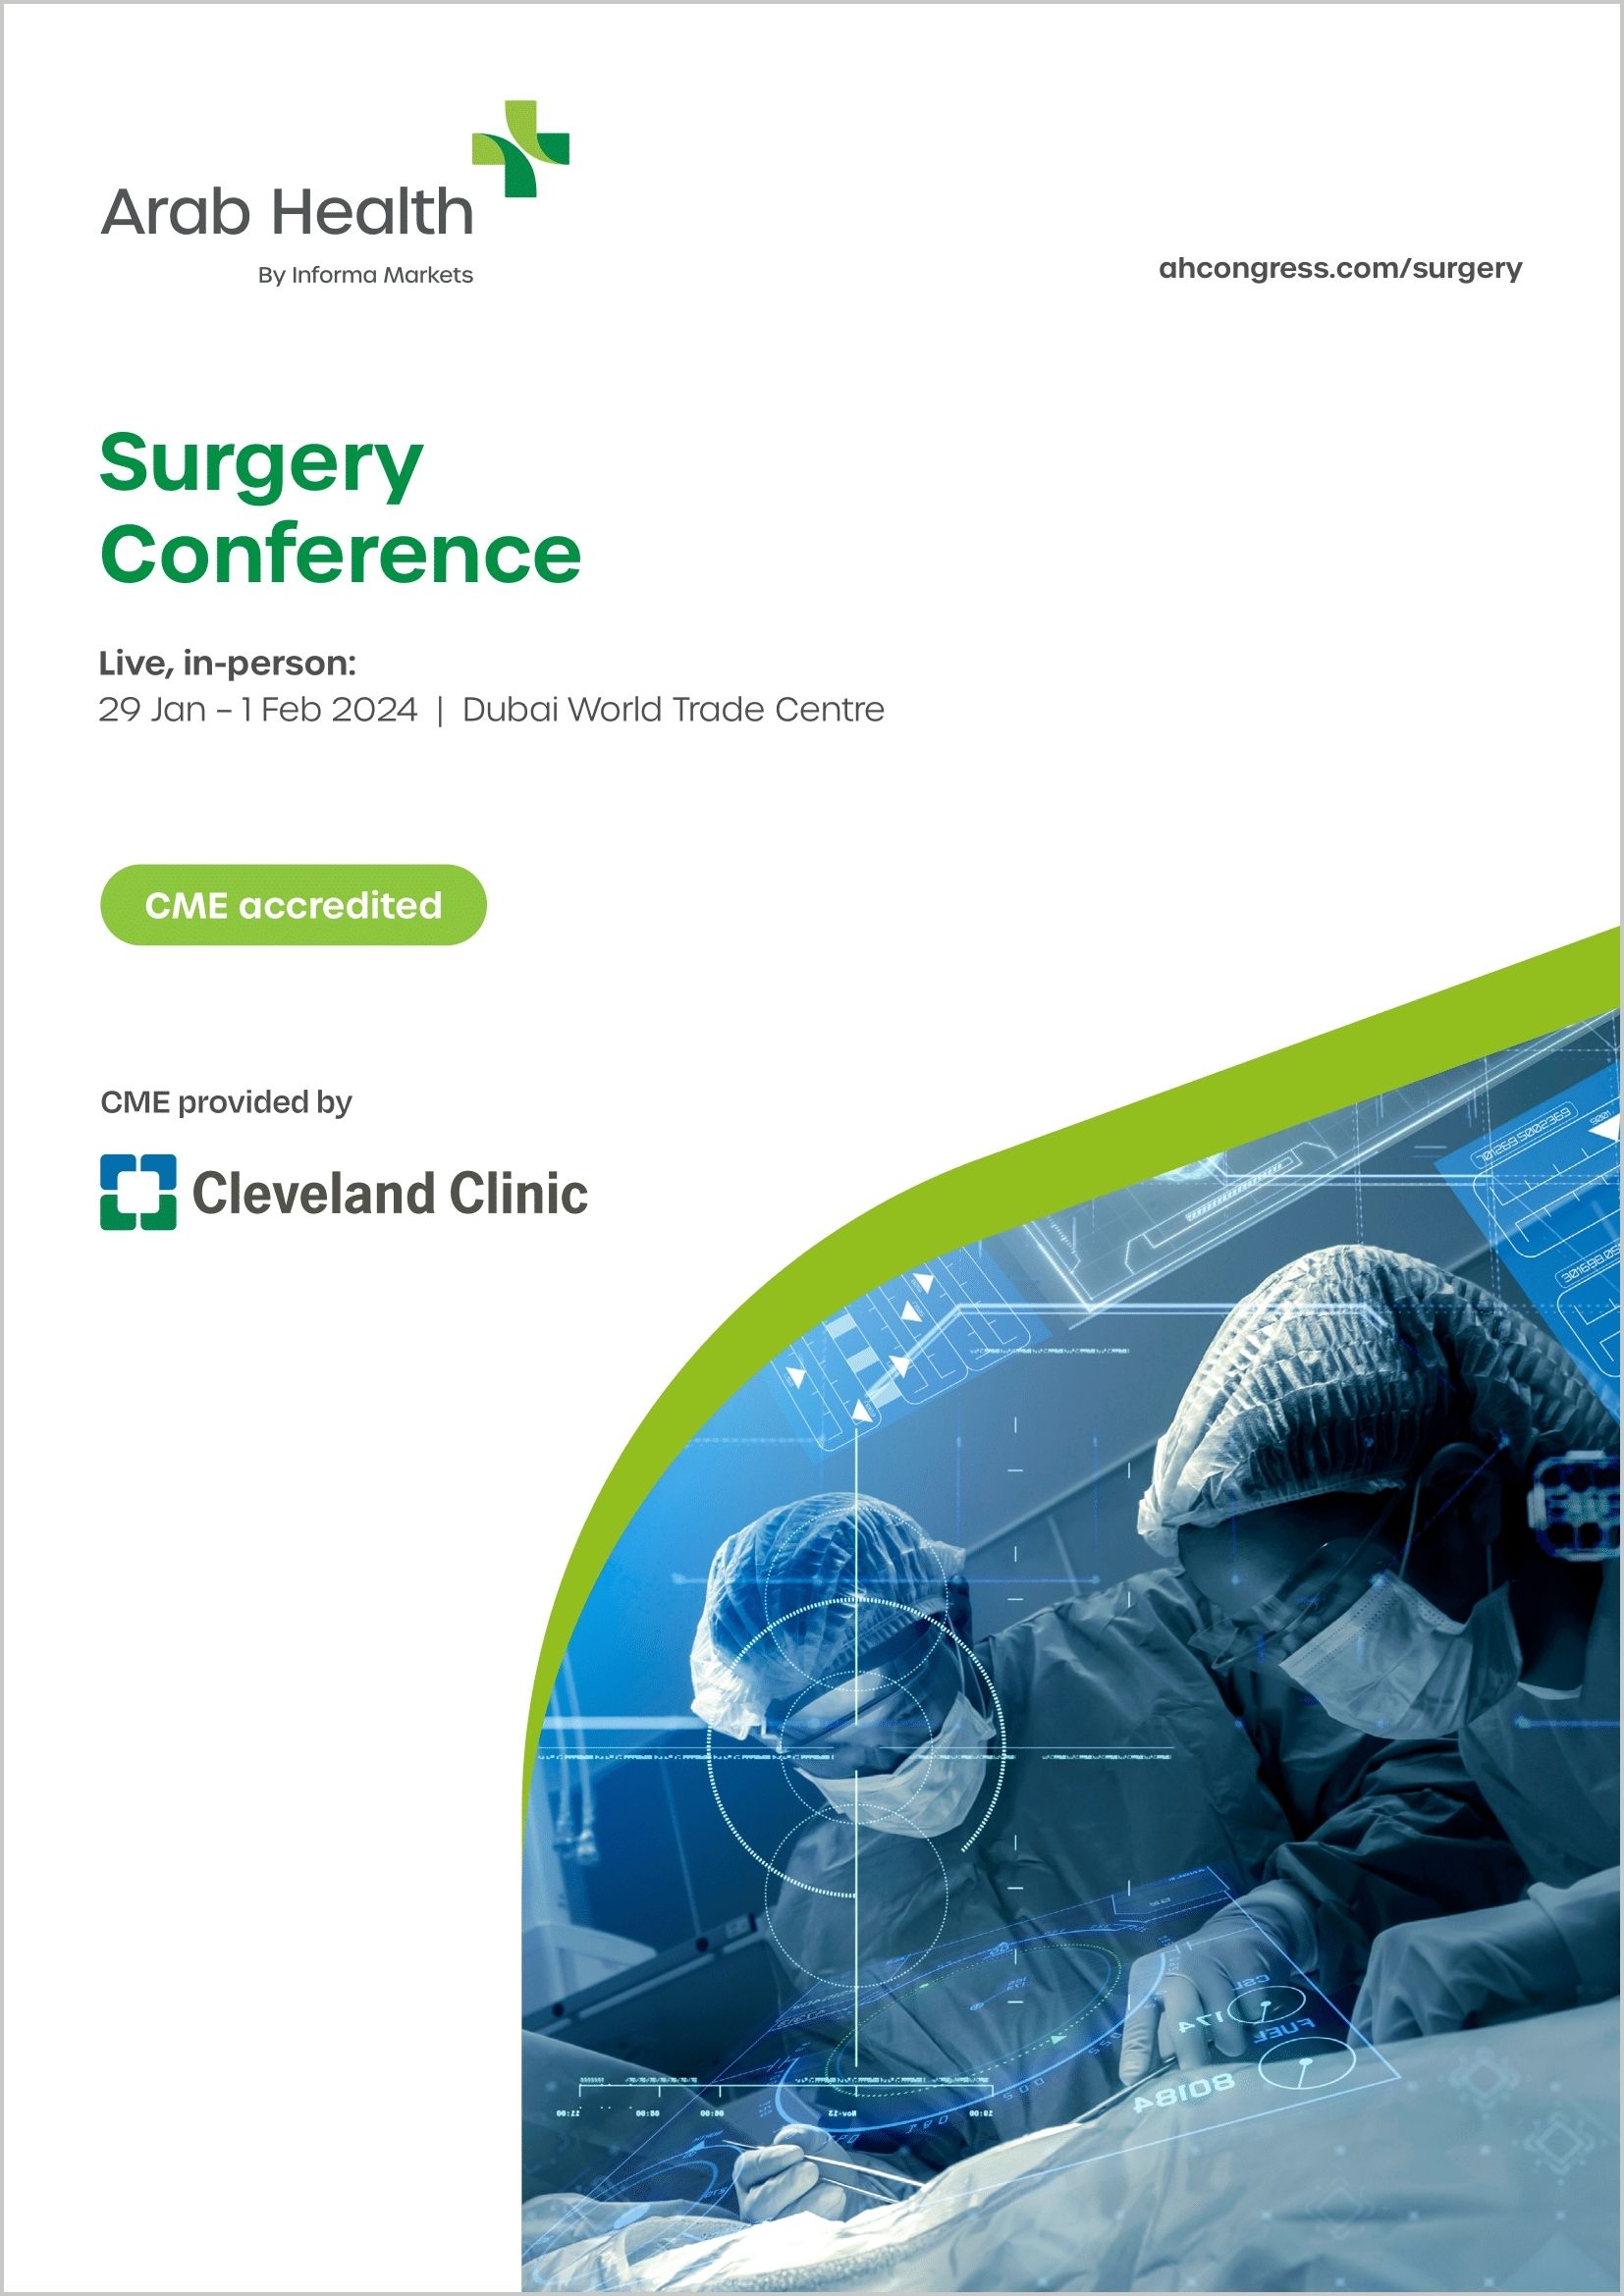 Surgery brochure